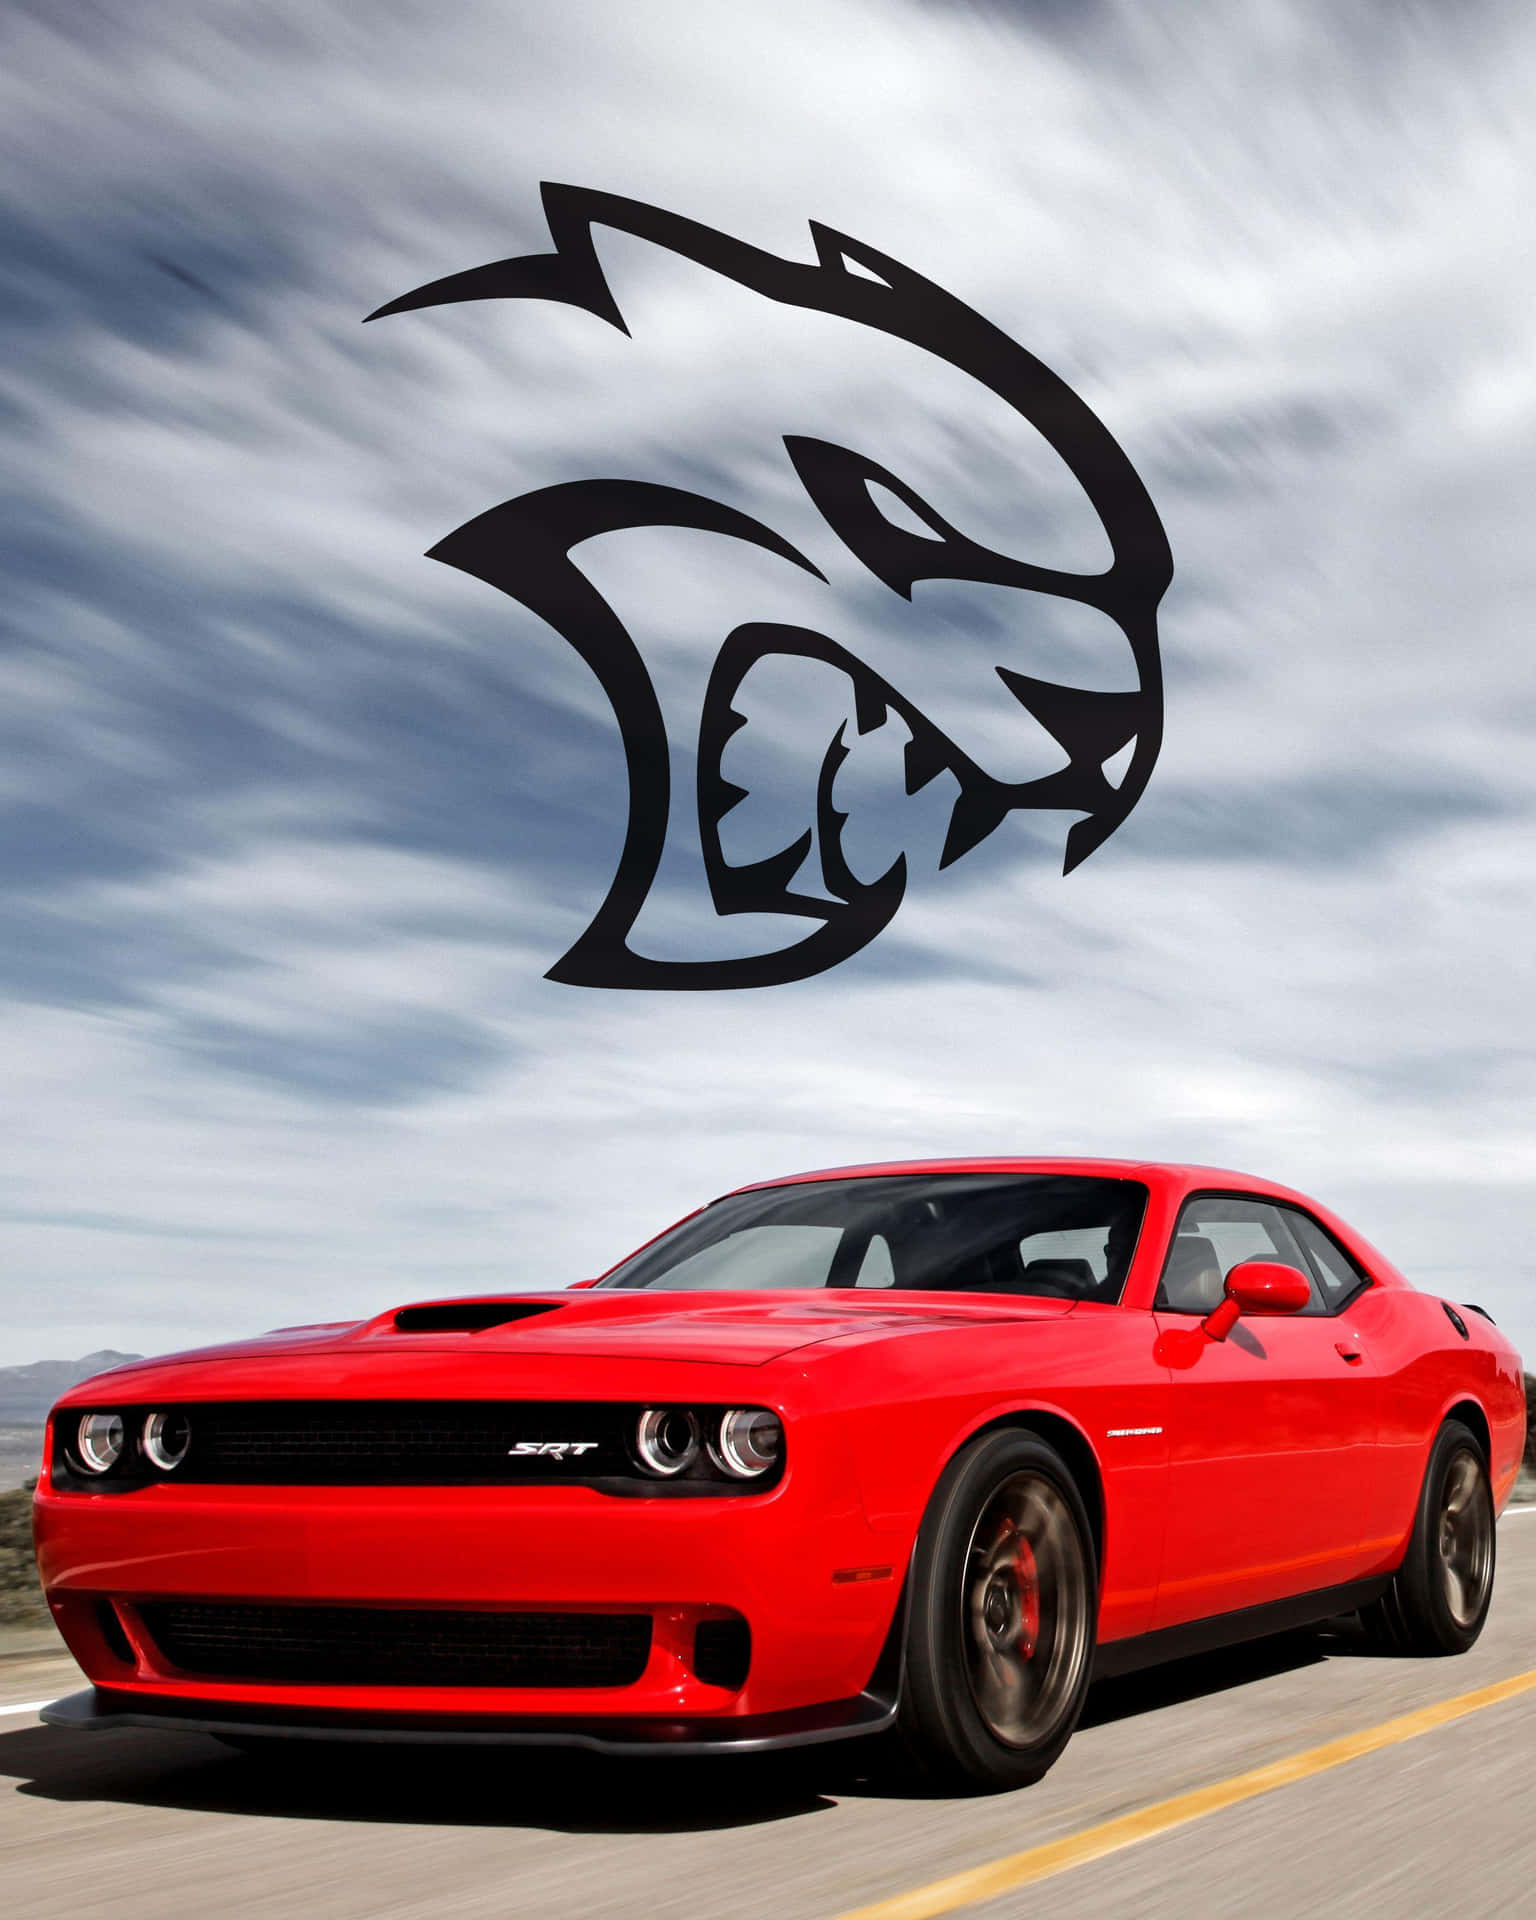 Dodge Challenger Srt - A Red Car With A Tiger Logo Background